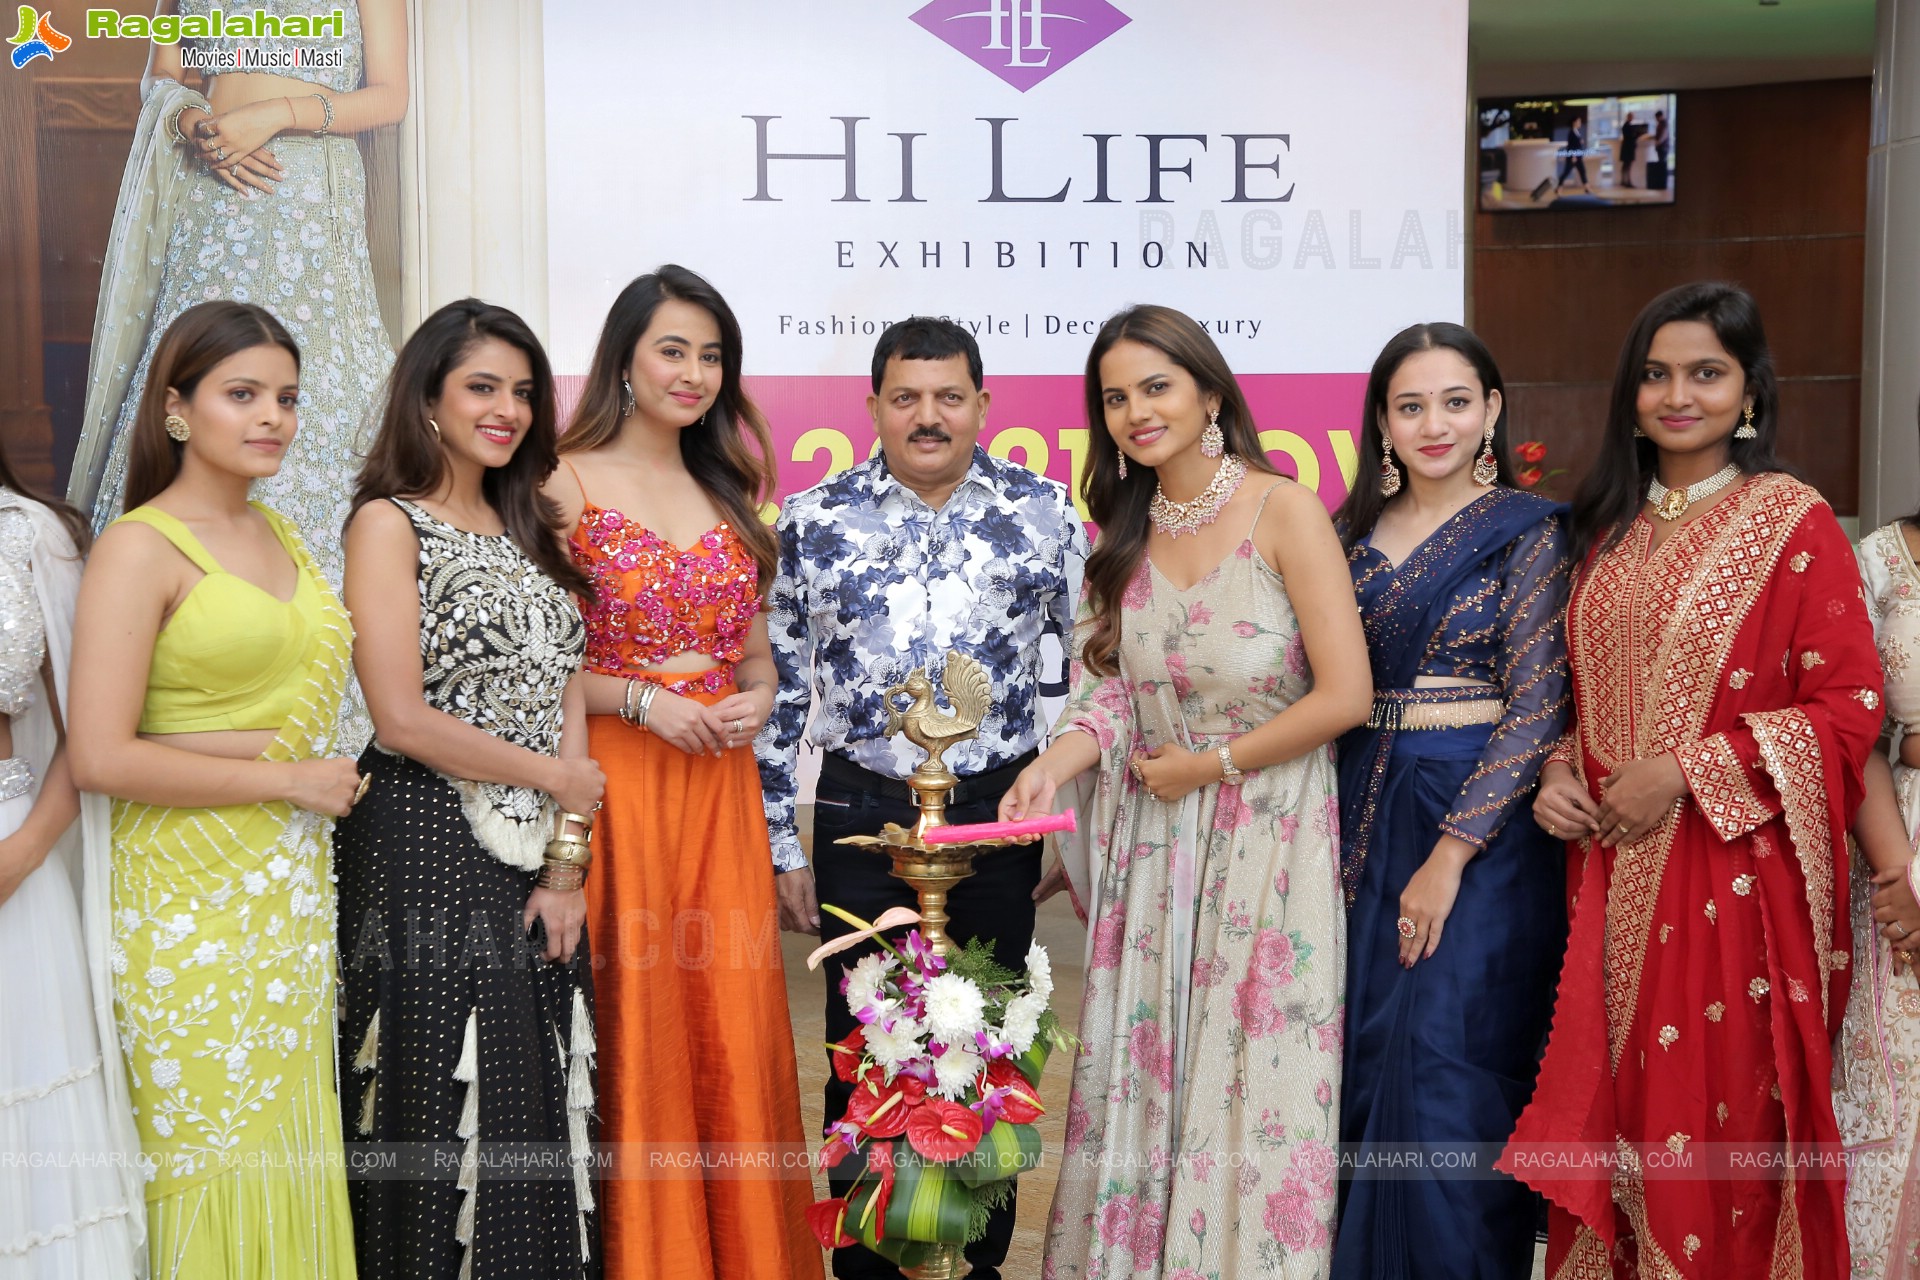 Hi Life Exhibition November 2022 Kicks Off at HICC-Novotel, Hyderabad